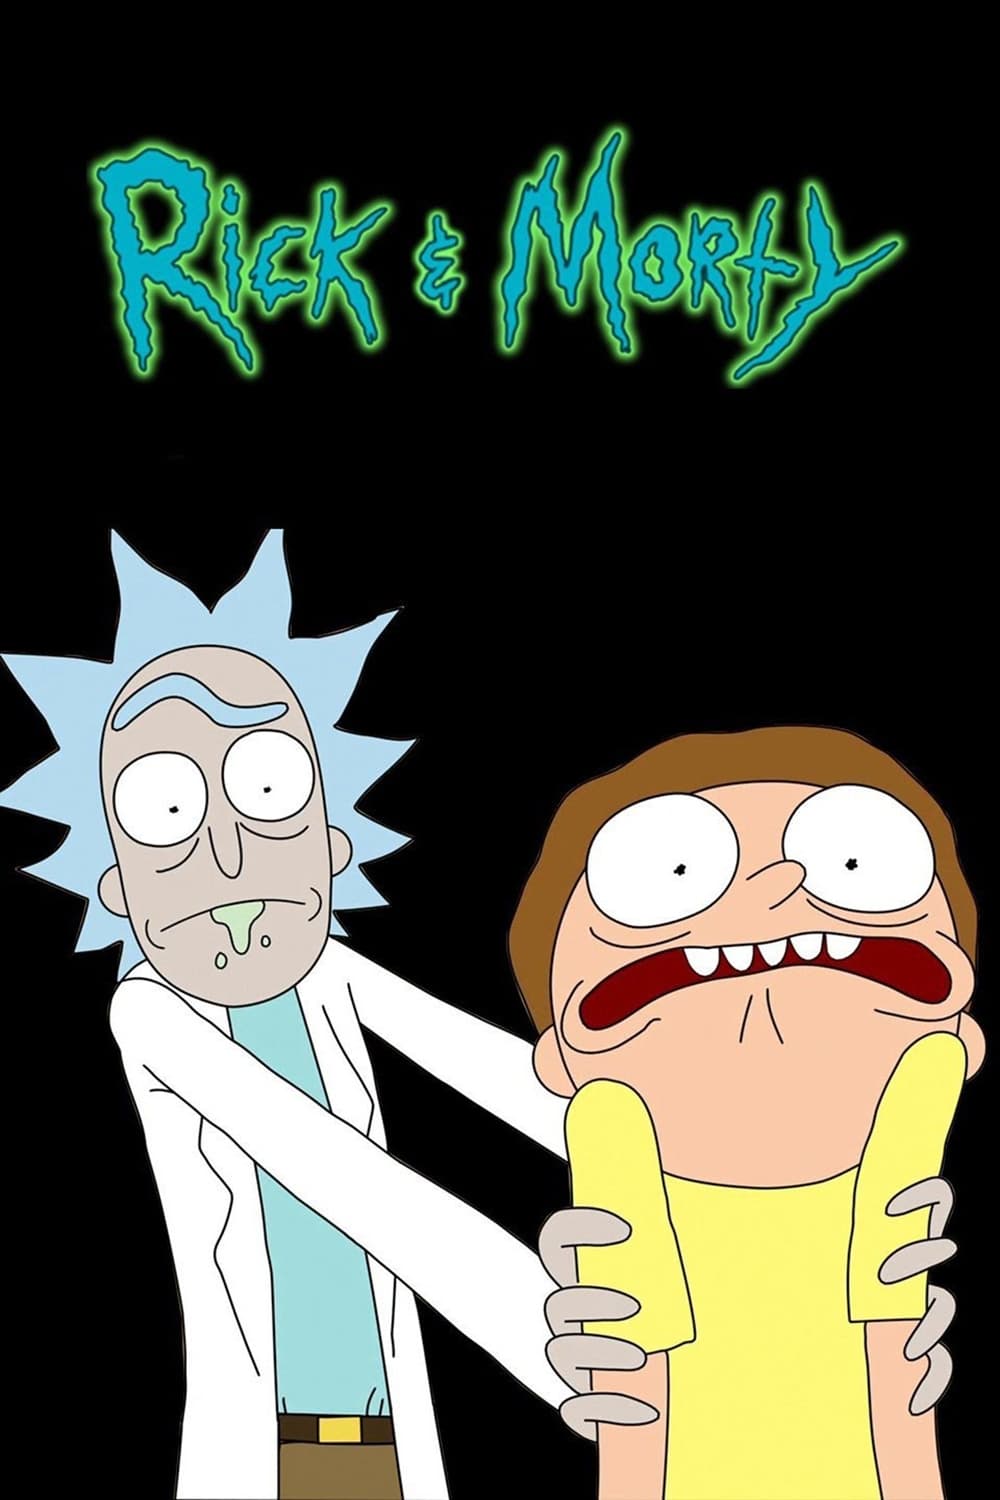 Rick & Morty S3